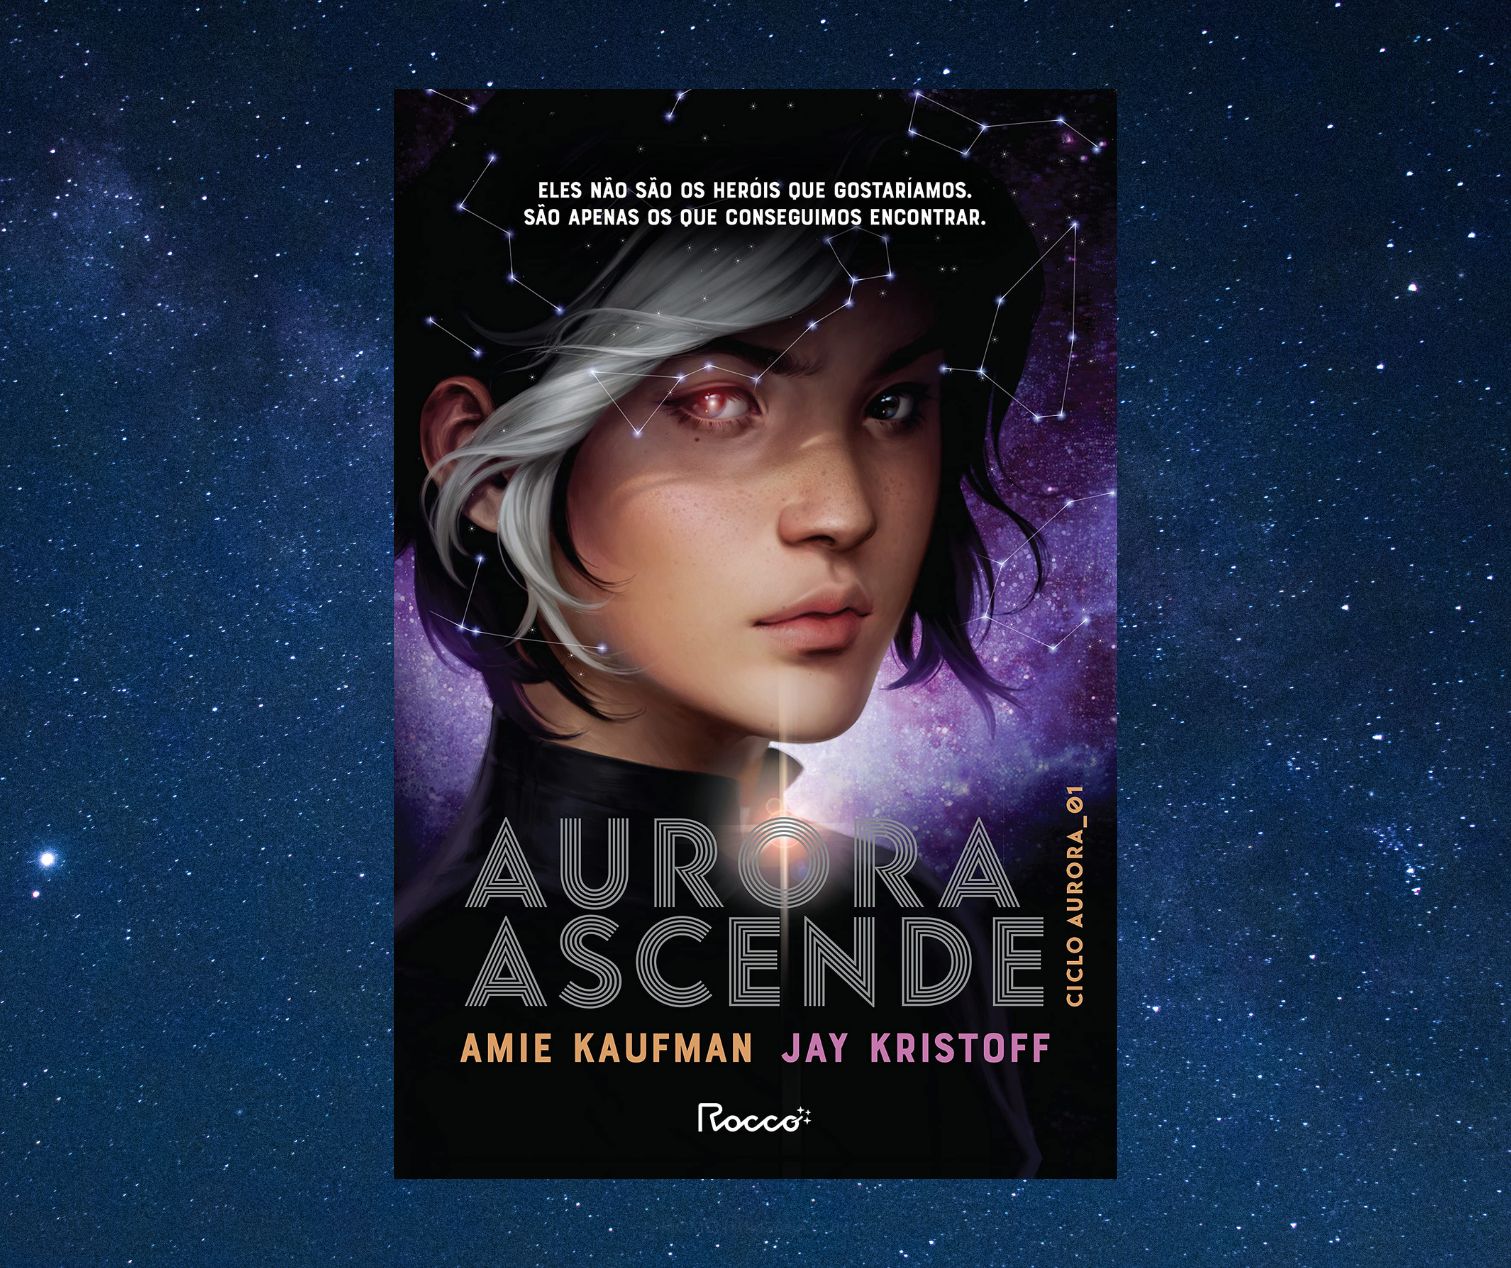 Resenha: Aurora ascende, de Amie Kaufman e Jay Kristoff